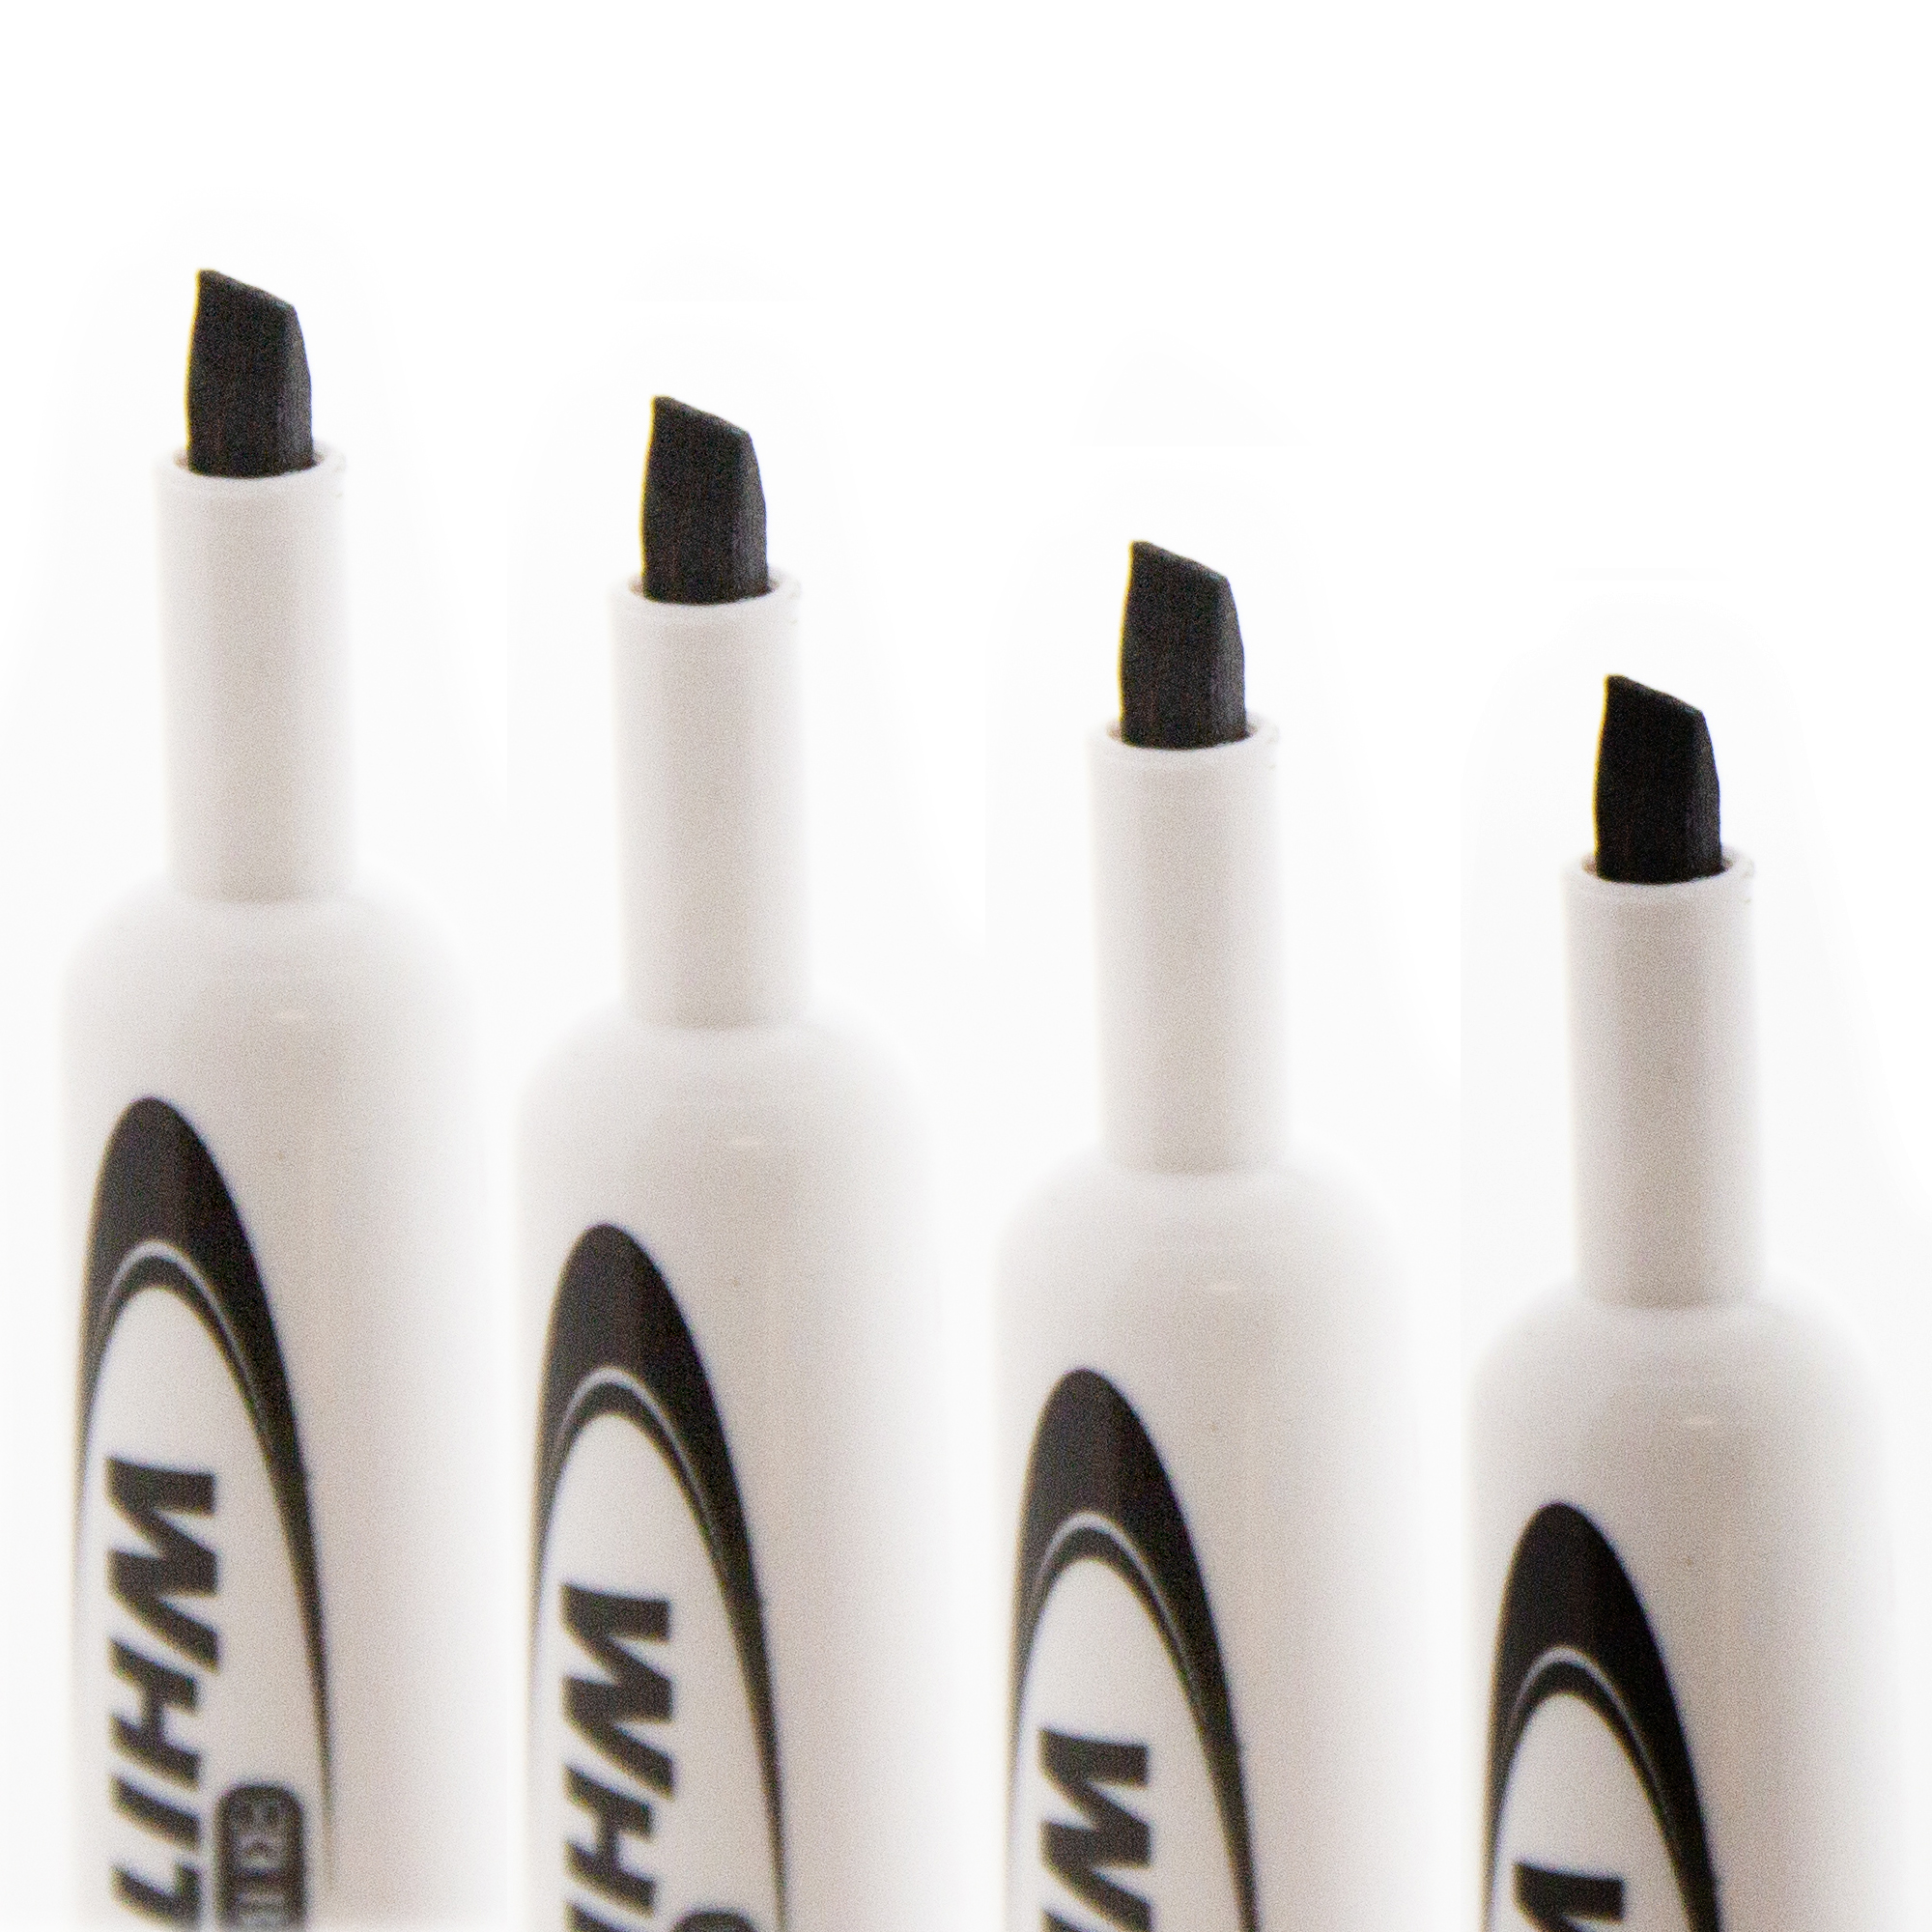 Dry Erase Markers, Chisel Tip, Black, Pack of 12 - DIX92007, Dixon  Ticonderoga Company